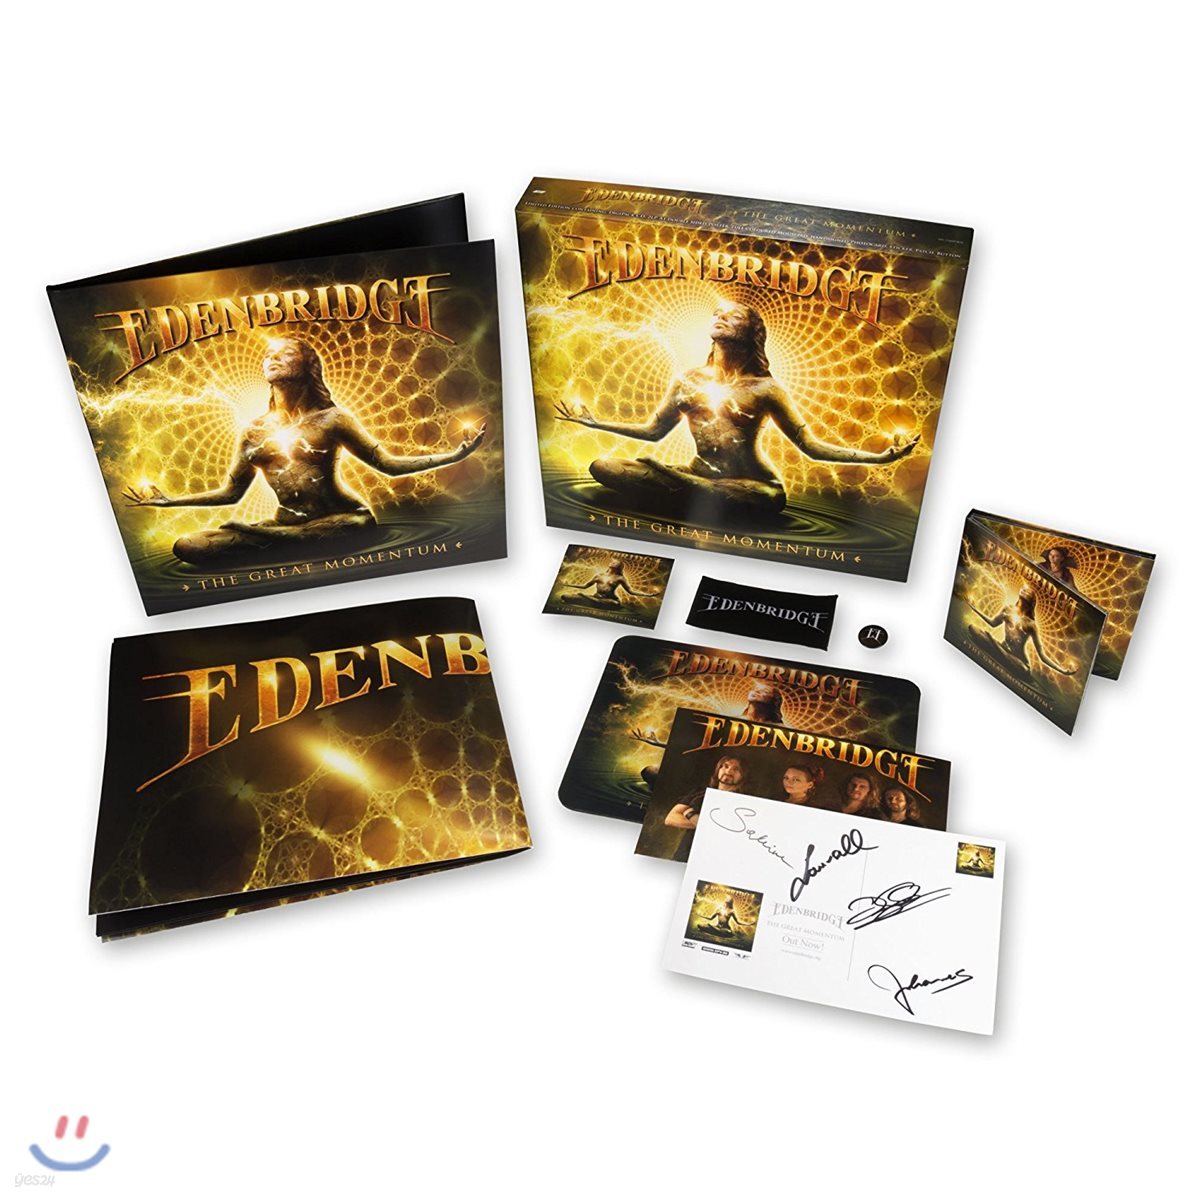 Edenbridge (에덴브릿지) - The Great Momentum [2 LP+2 CD]